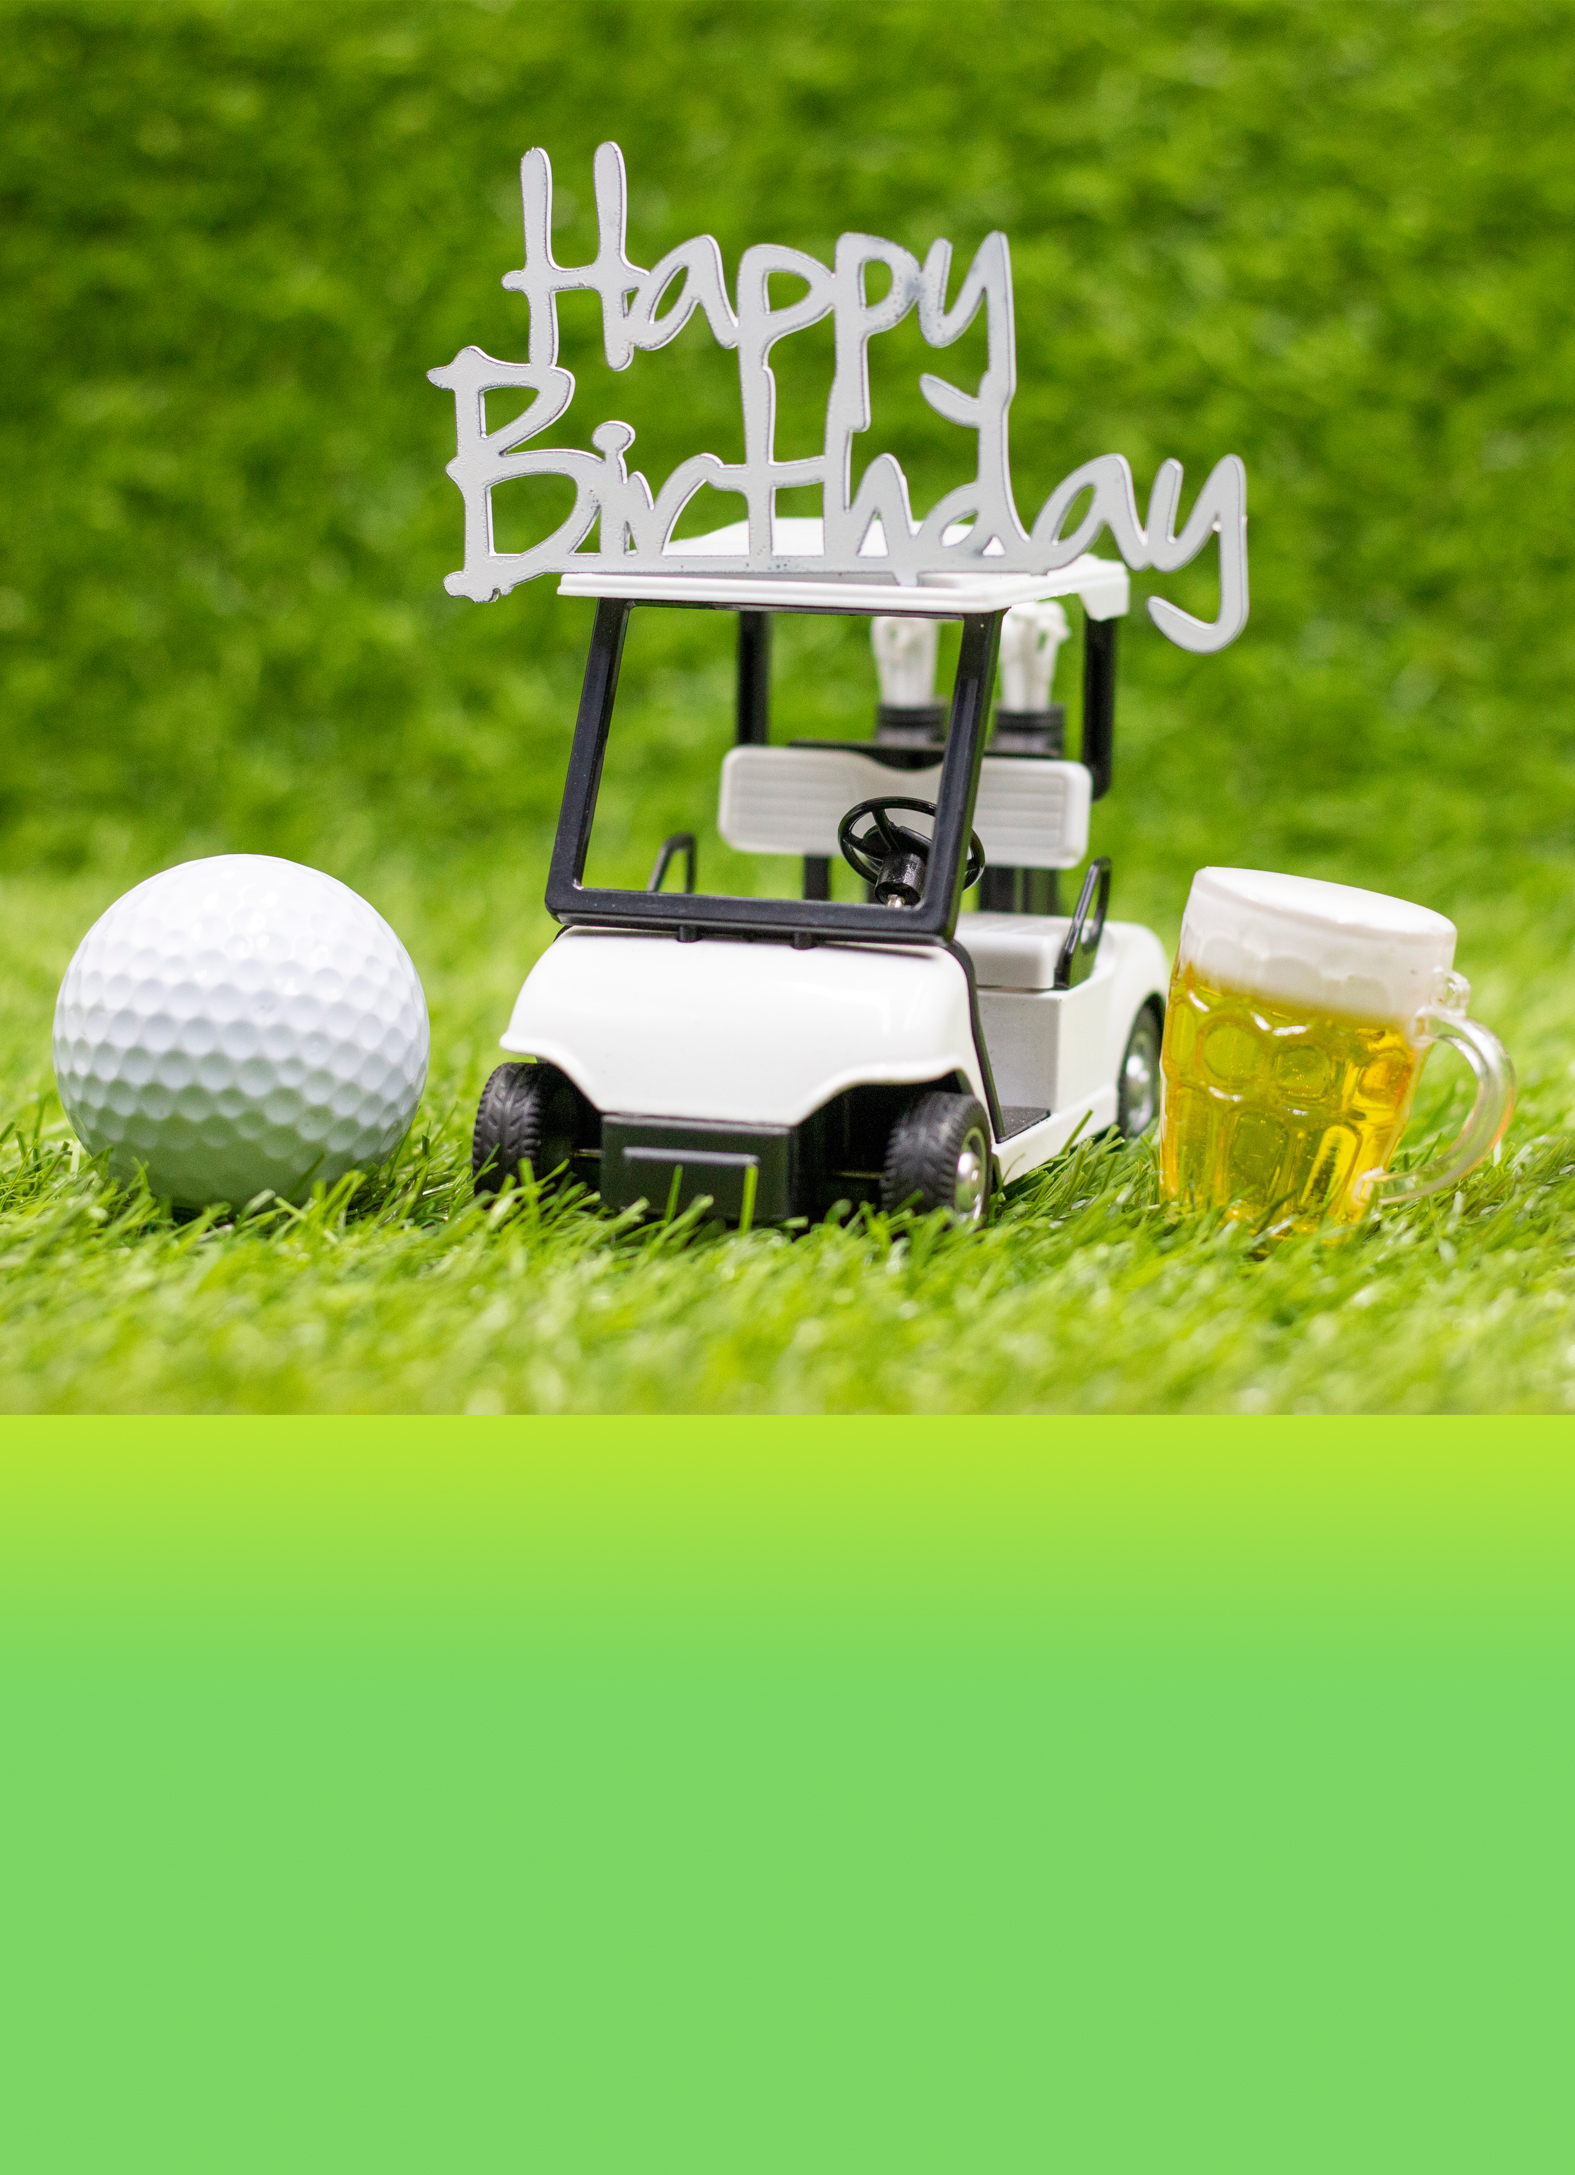 PAR TEE Golf Card Cover